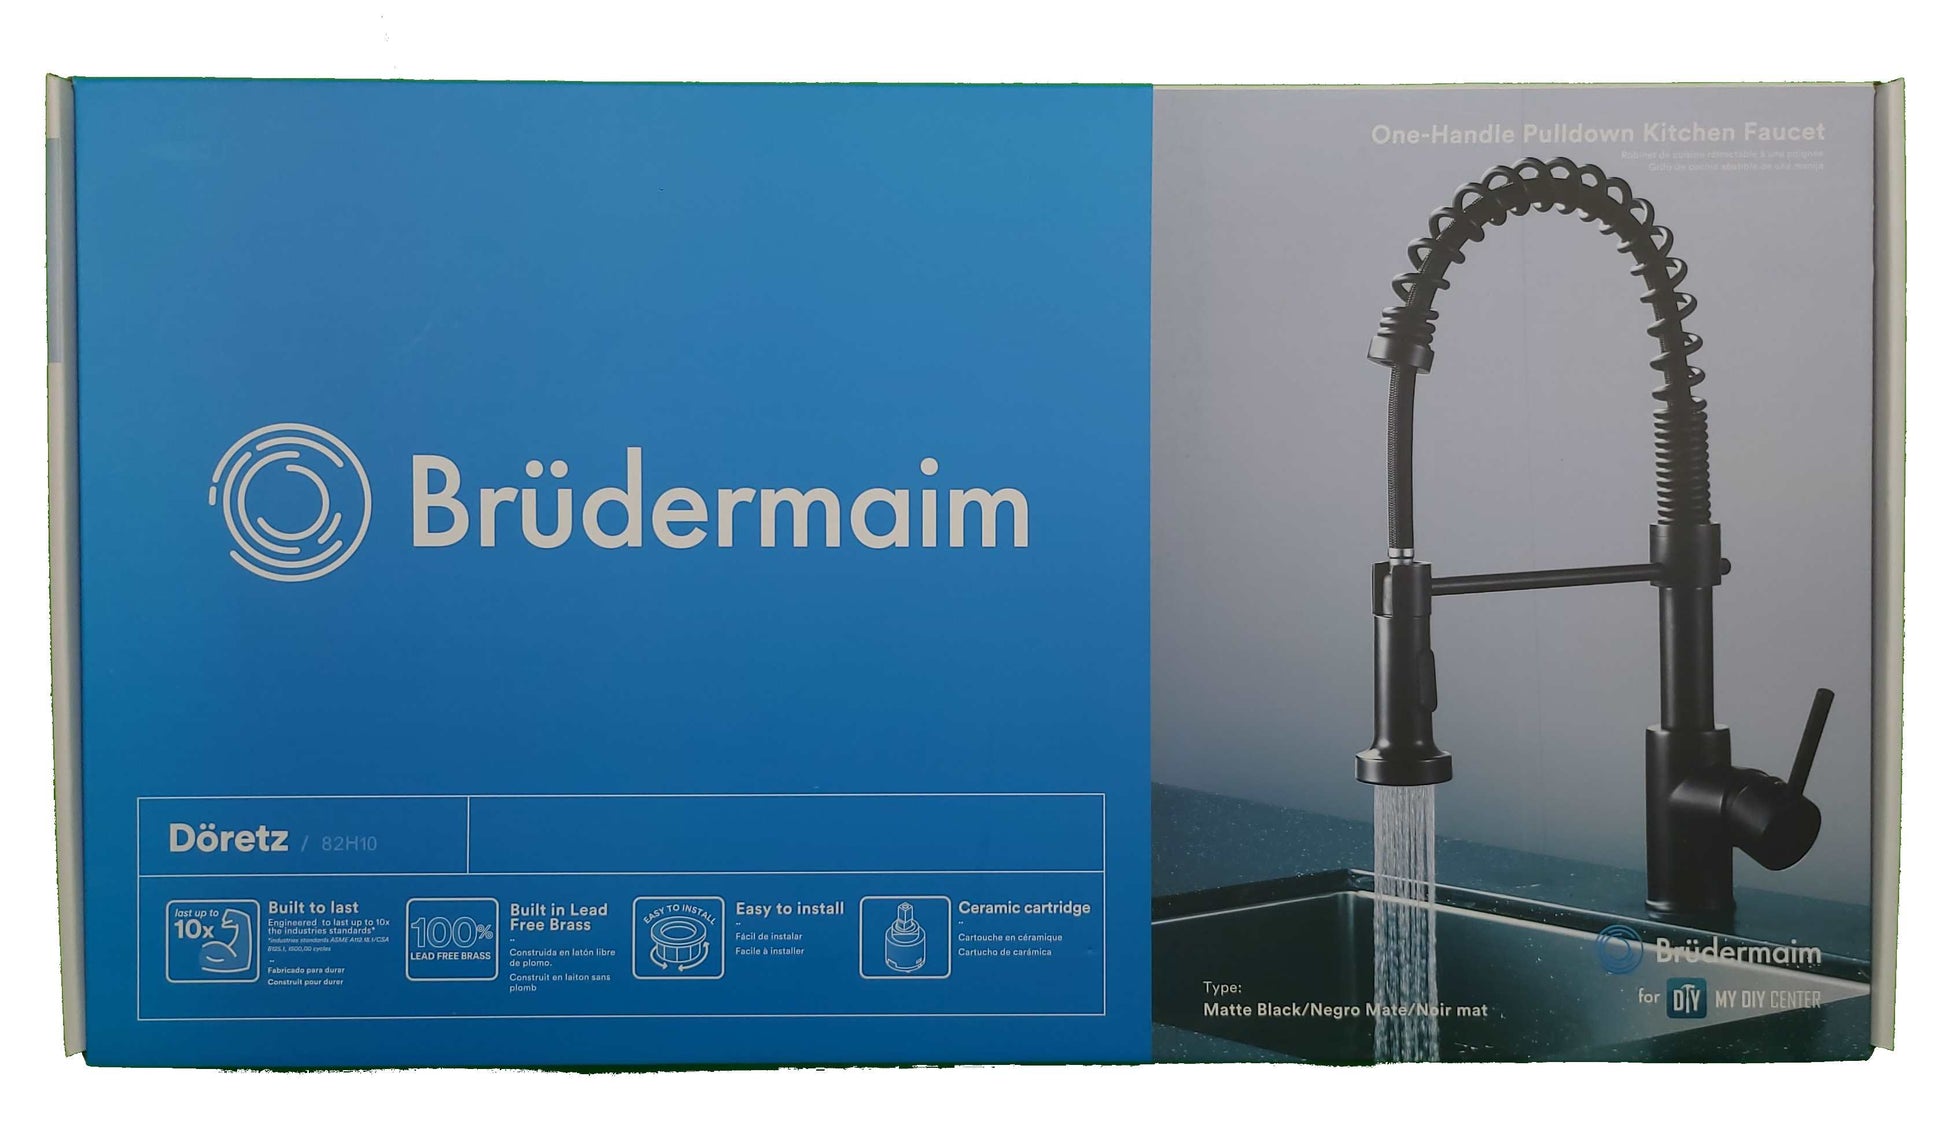 6pcs Box - Pulldown Kitchen Faucet - BRÜDERMAIM Döretz - Matte Black - Lead Free Brass - cUPC Certified - Ceramic Cartridge